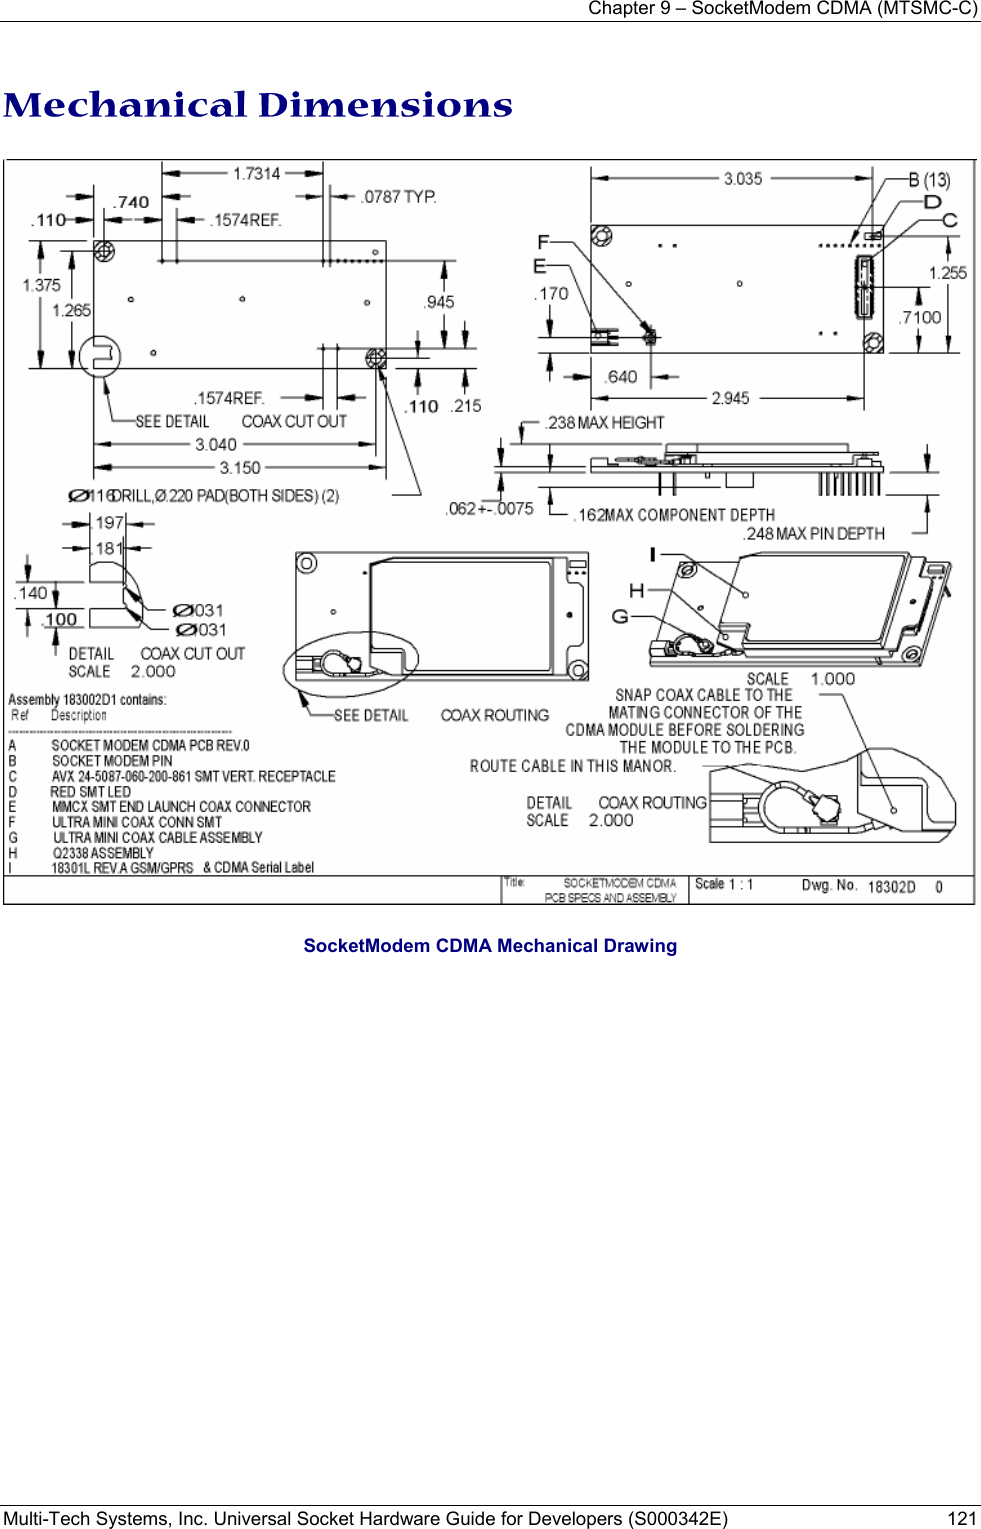 Chapter 9 – SocketModem CDMA (MTSMC-C) Multi-Tech Systems, Inc. Universal Socket Hardware Guide for Developers (S000342E)  121  Mechanical Dimensions   SocketModem CDMA Mechanical Drawing  